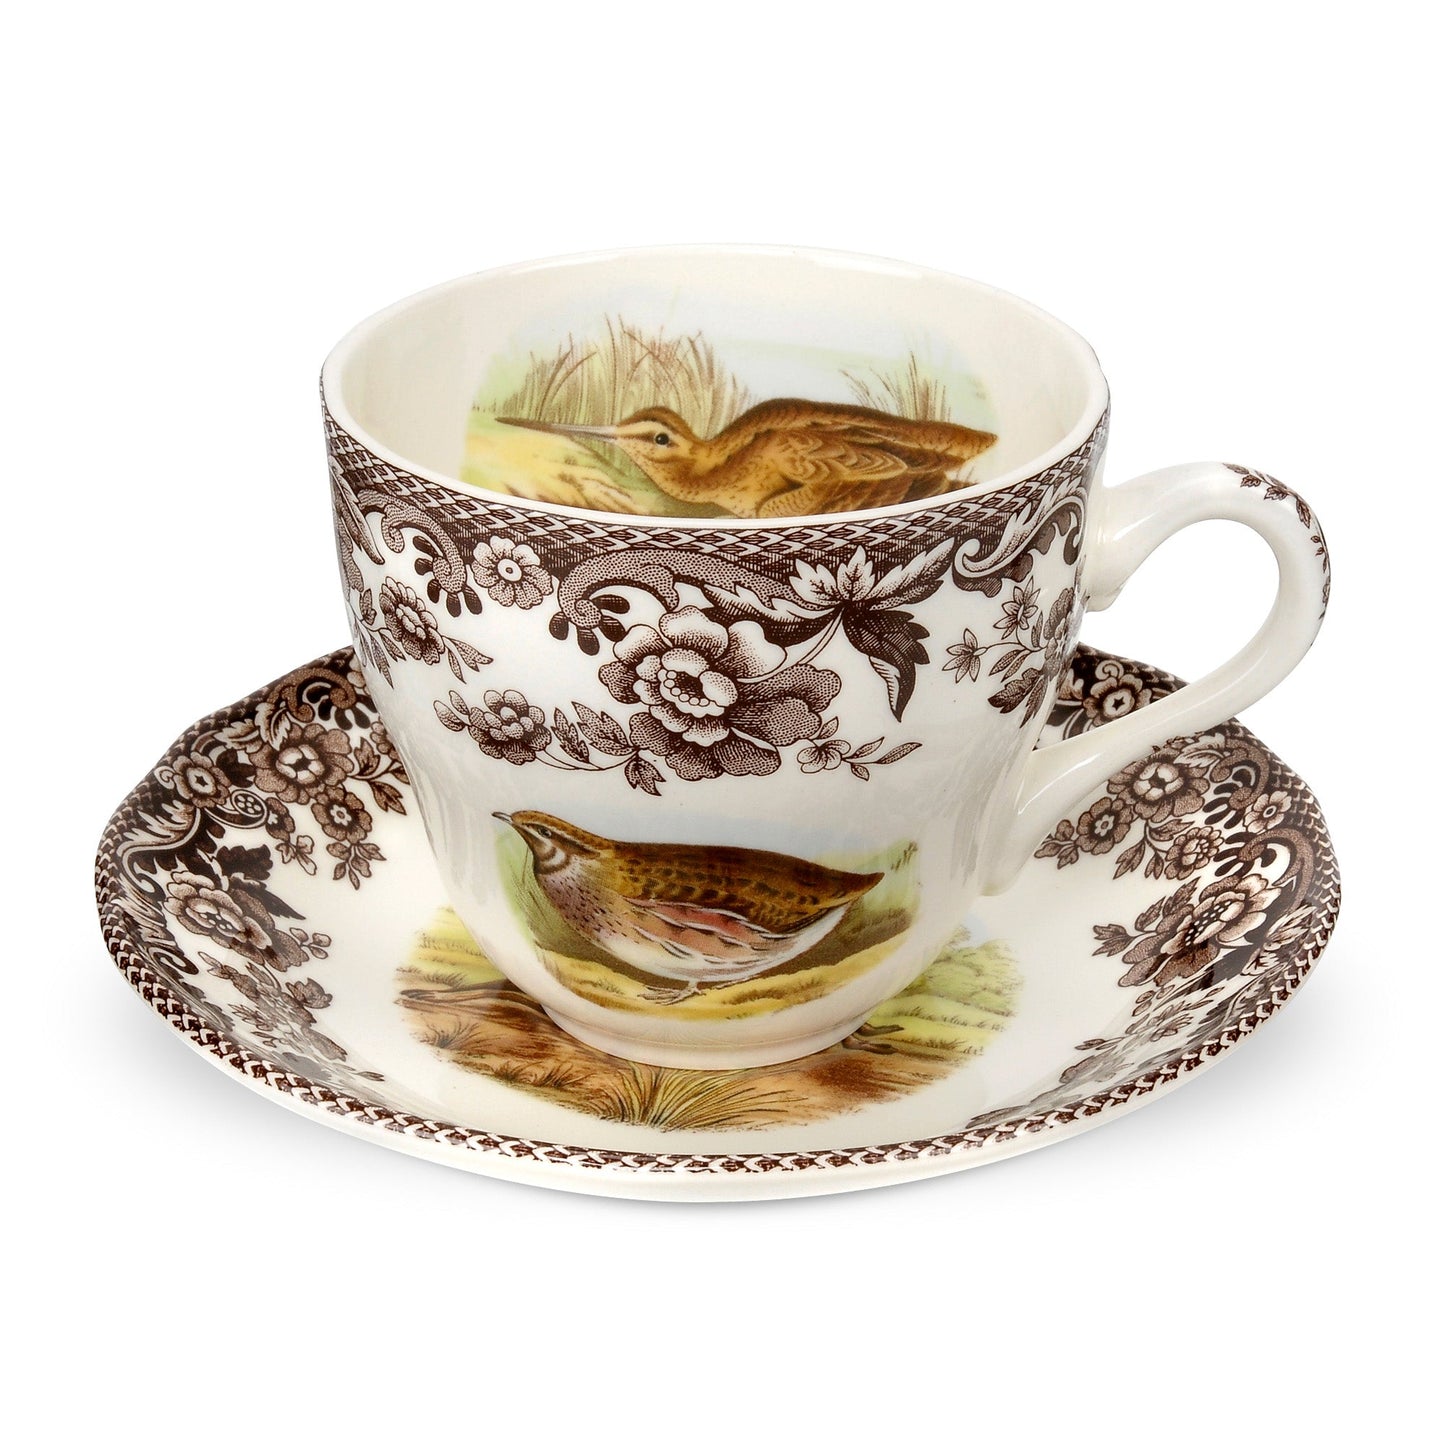 Spode Woodland Set Of 4 Teacups And Saucers- price cut - Shoppedeals